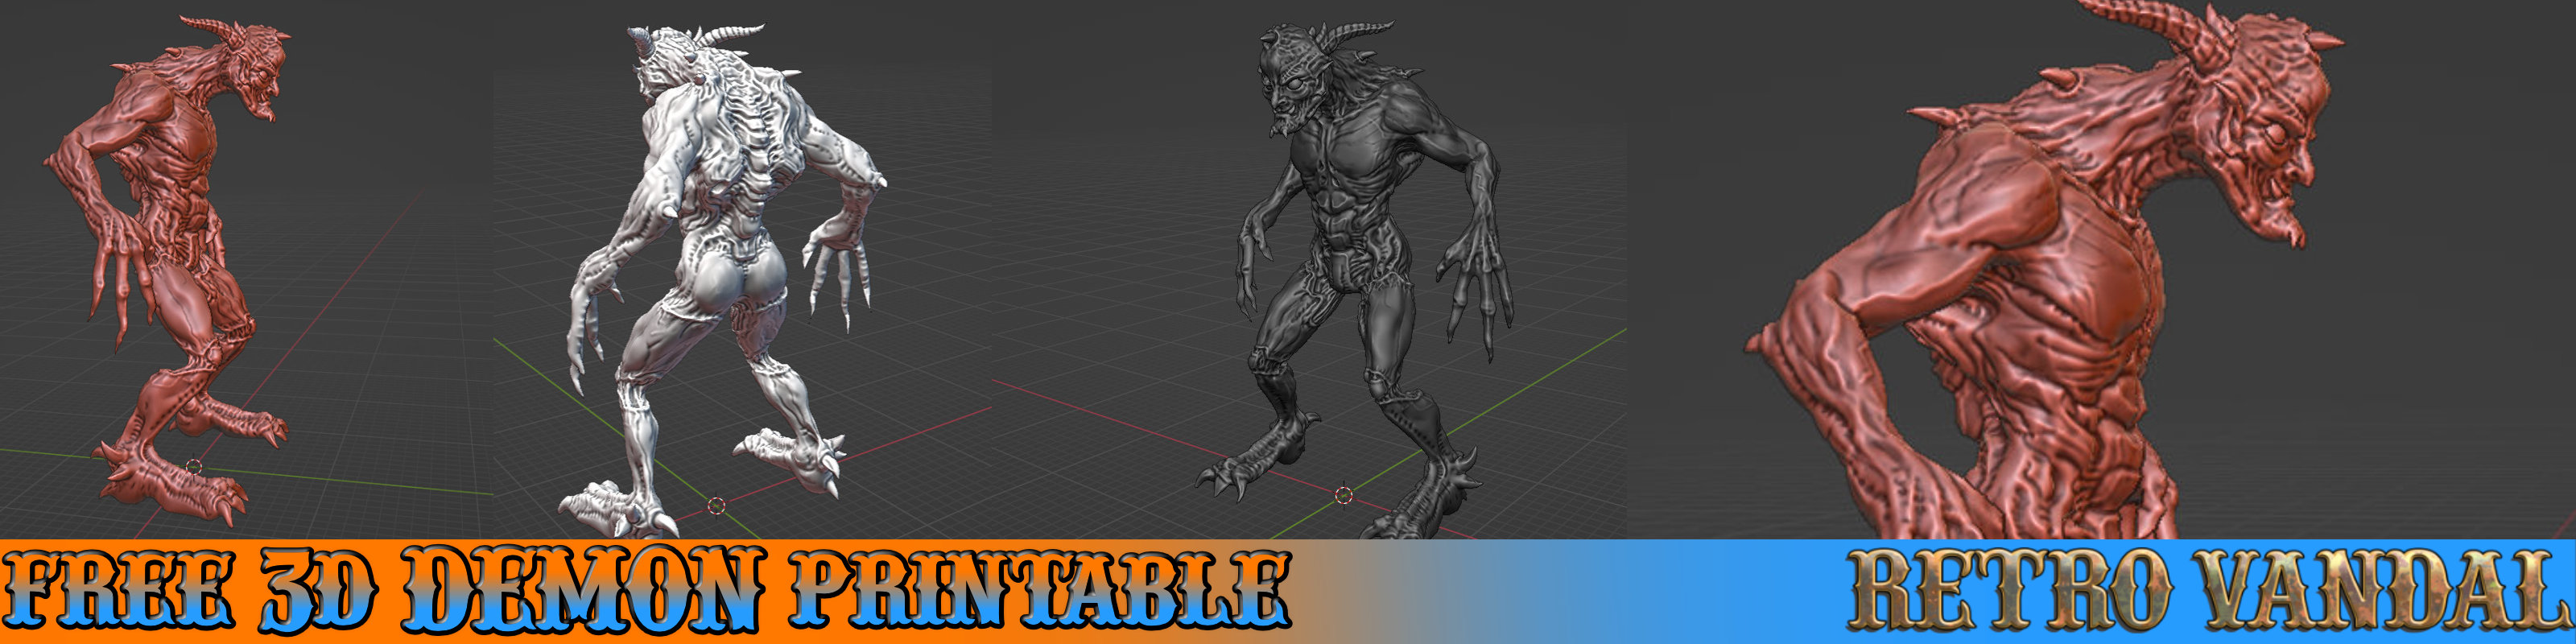 3D Demon Creature model for 3D Printing